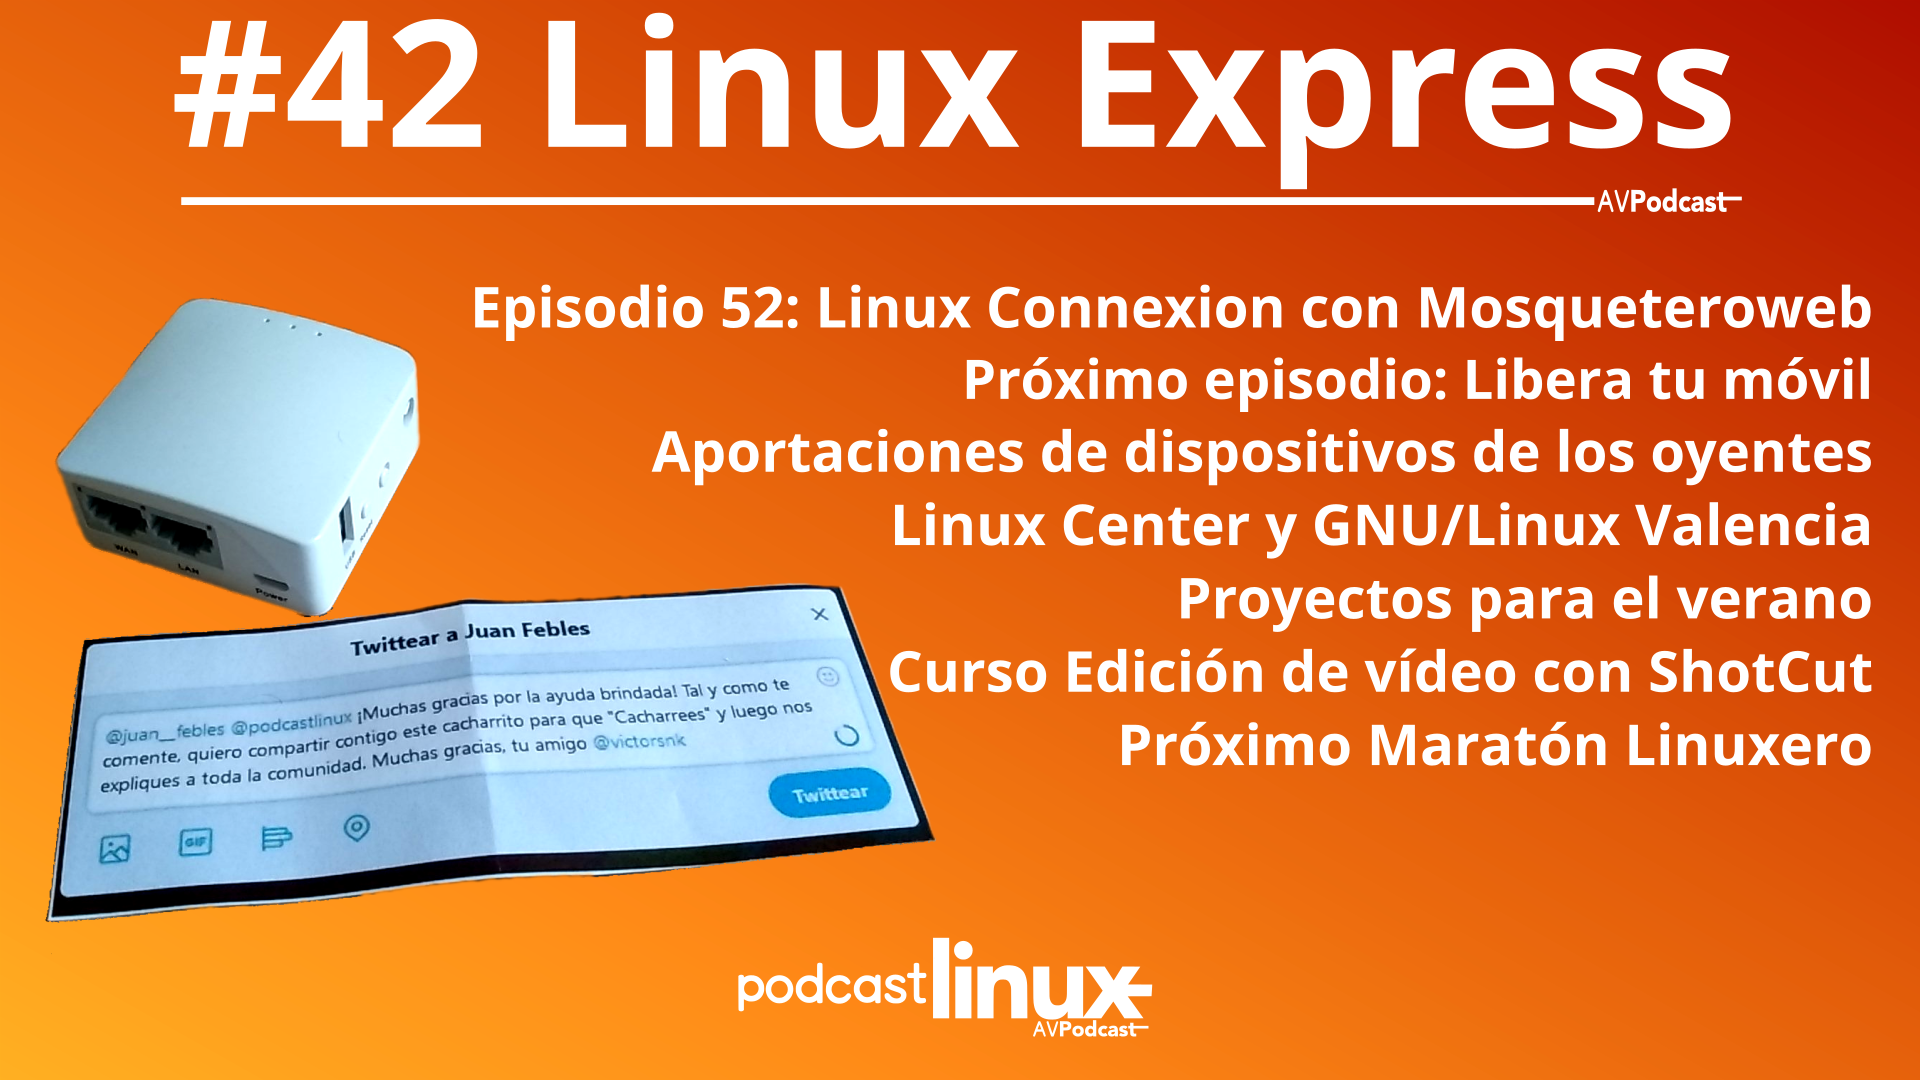 #42 Linux Express